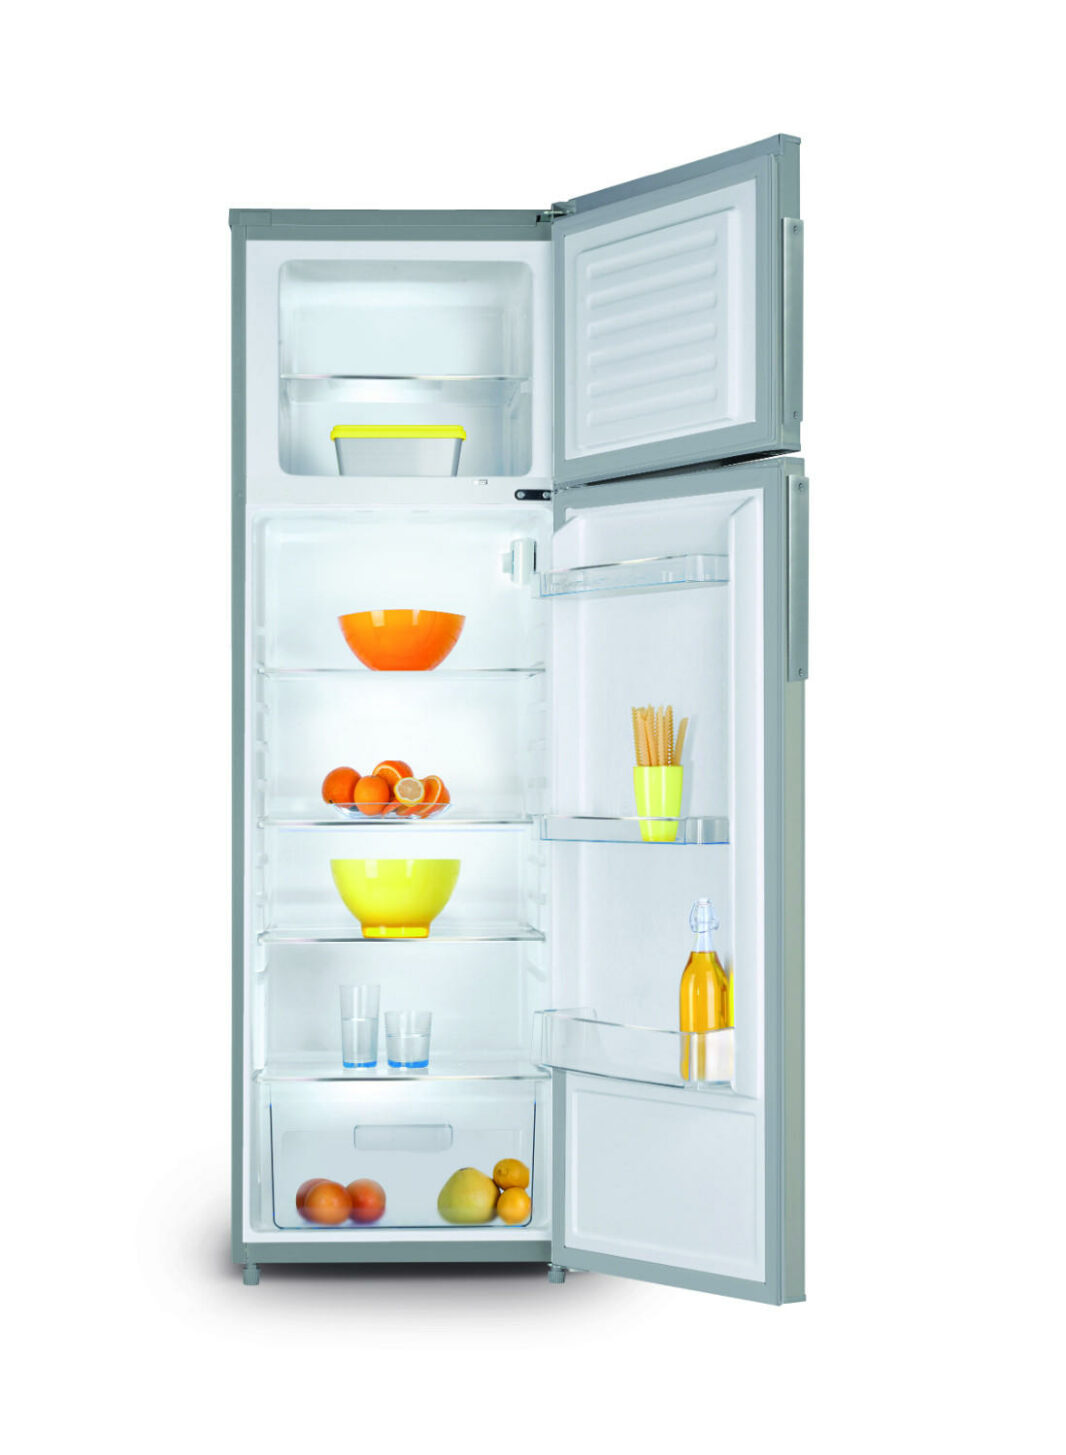 Réfrigérateur 2 portes inox 260L - Schneider